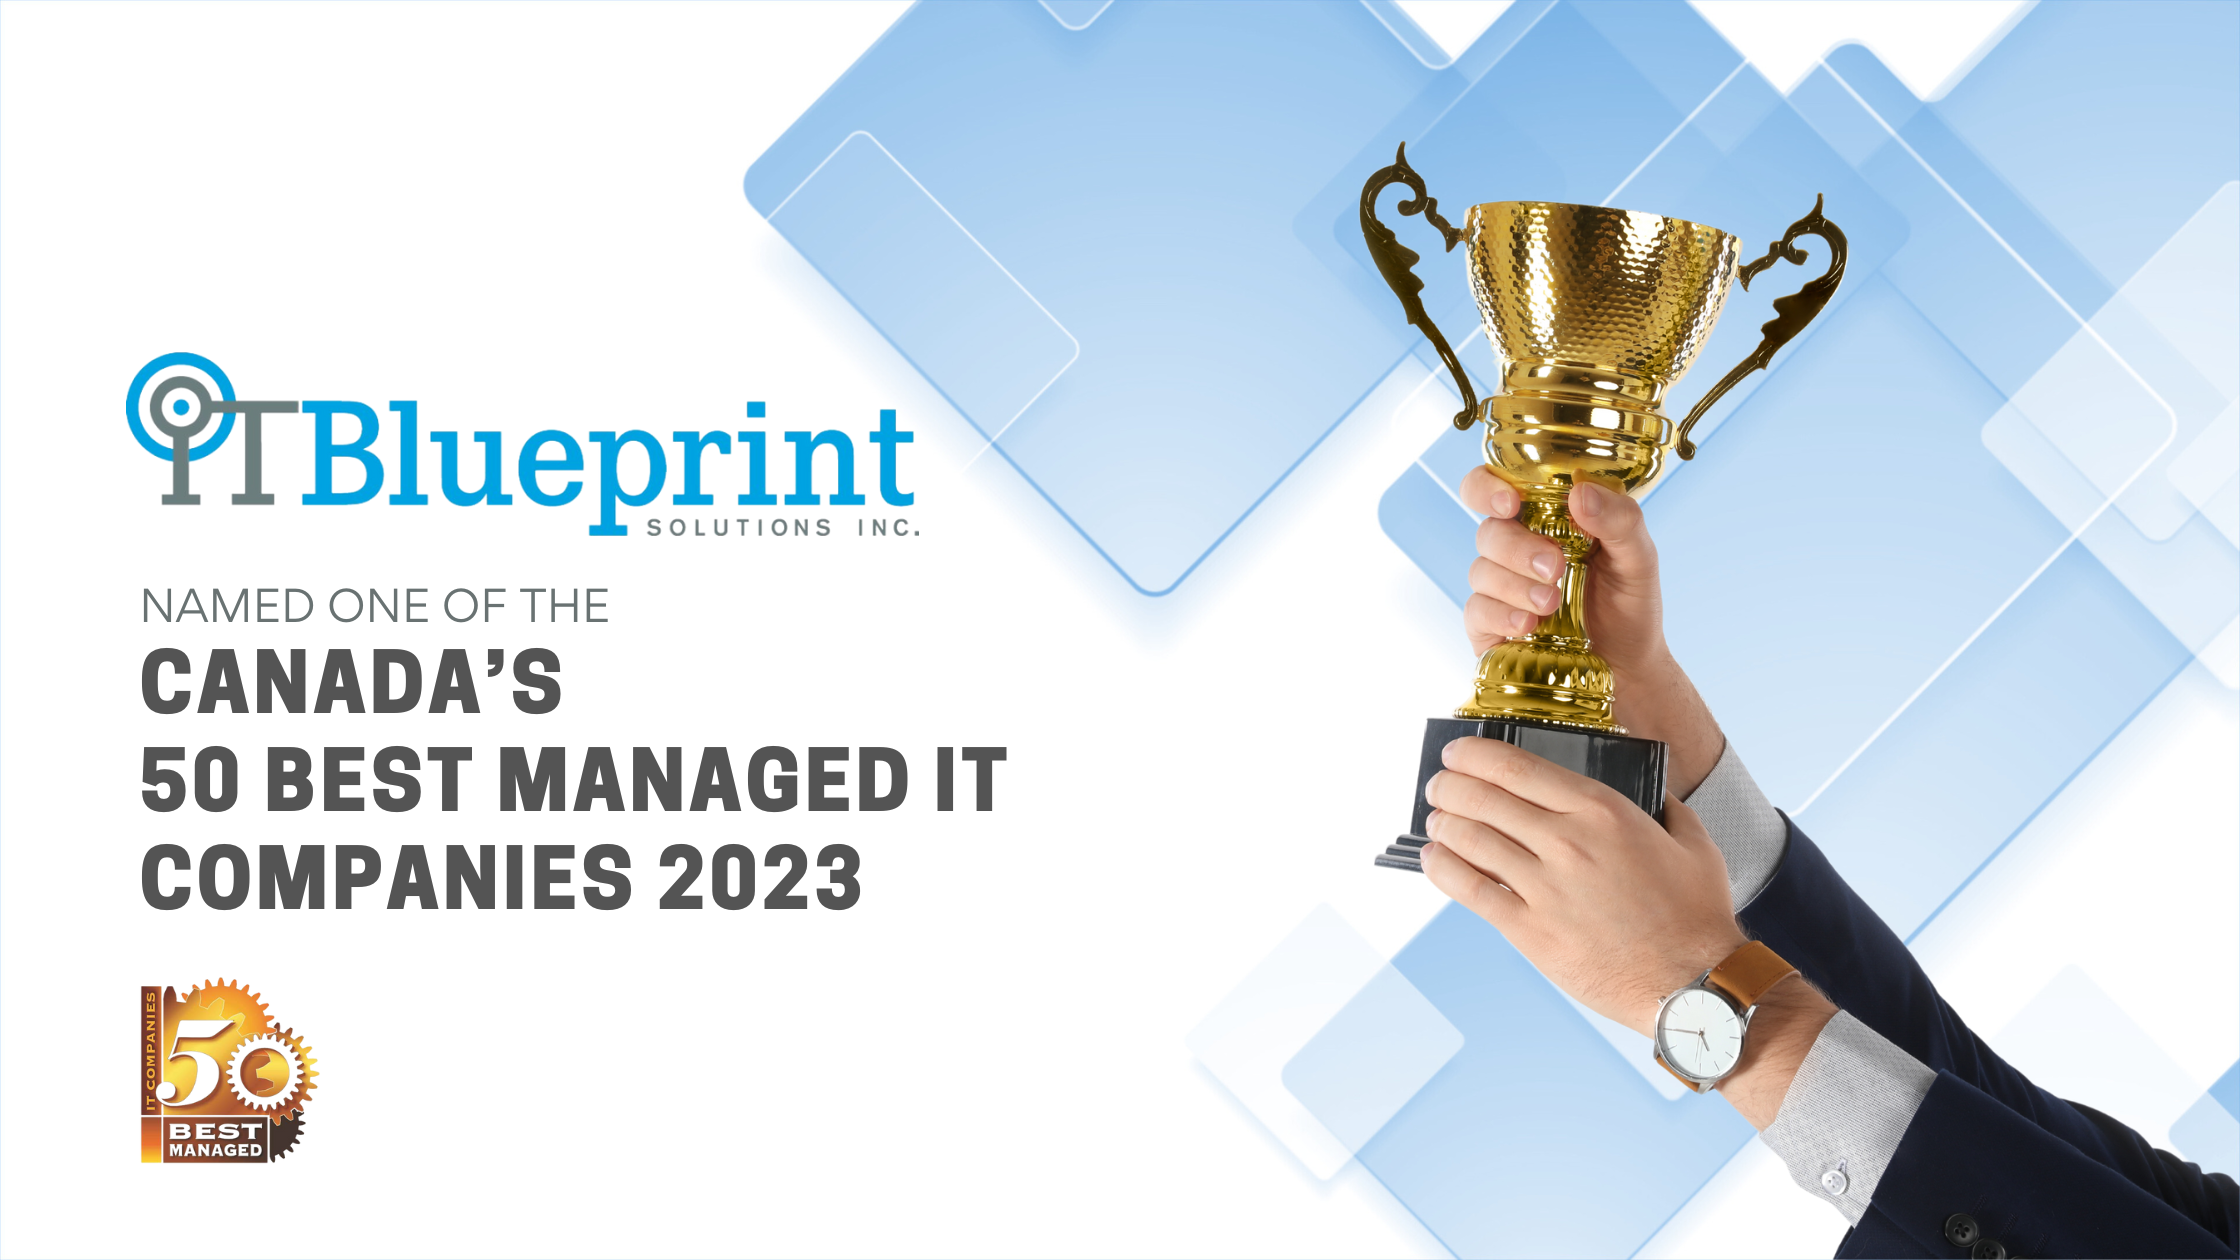 iTBlueprint 50 best IT managed companies 2023